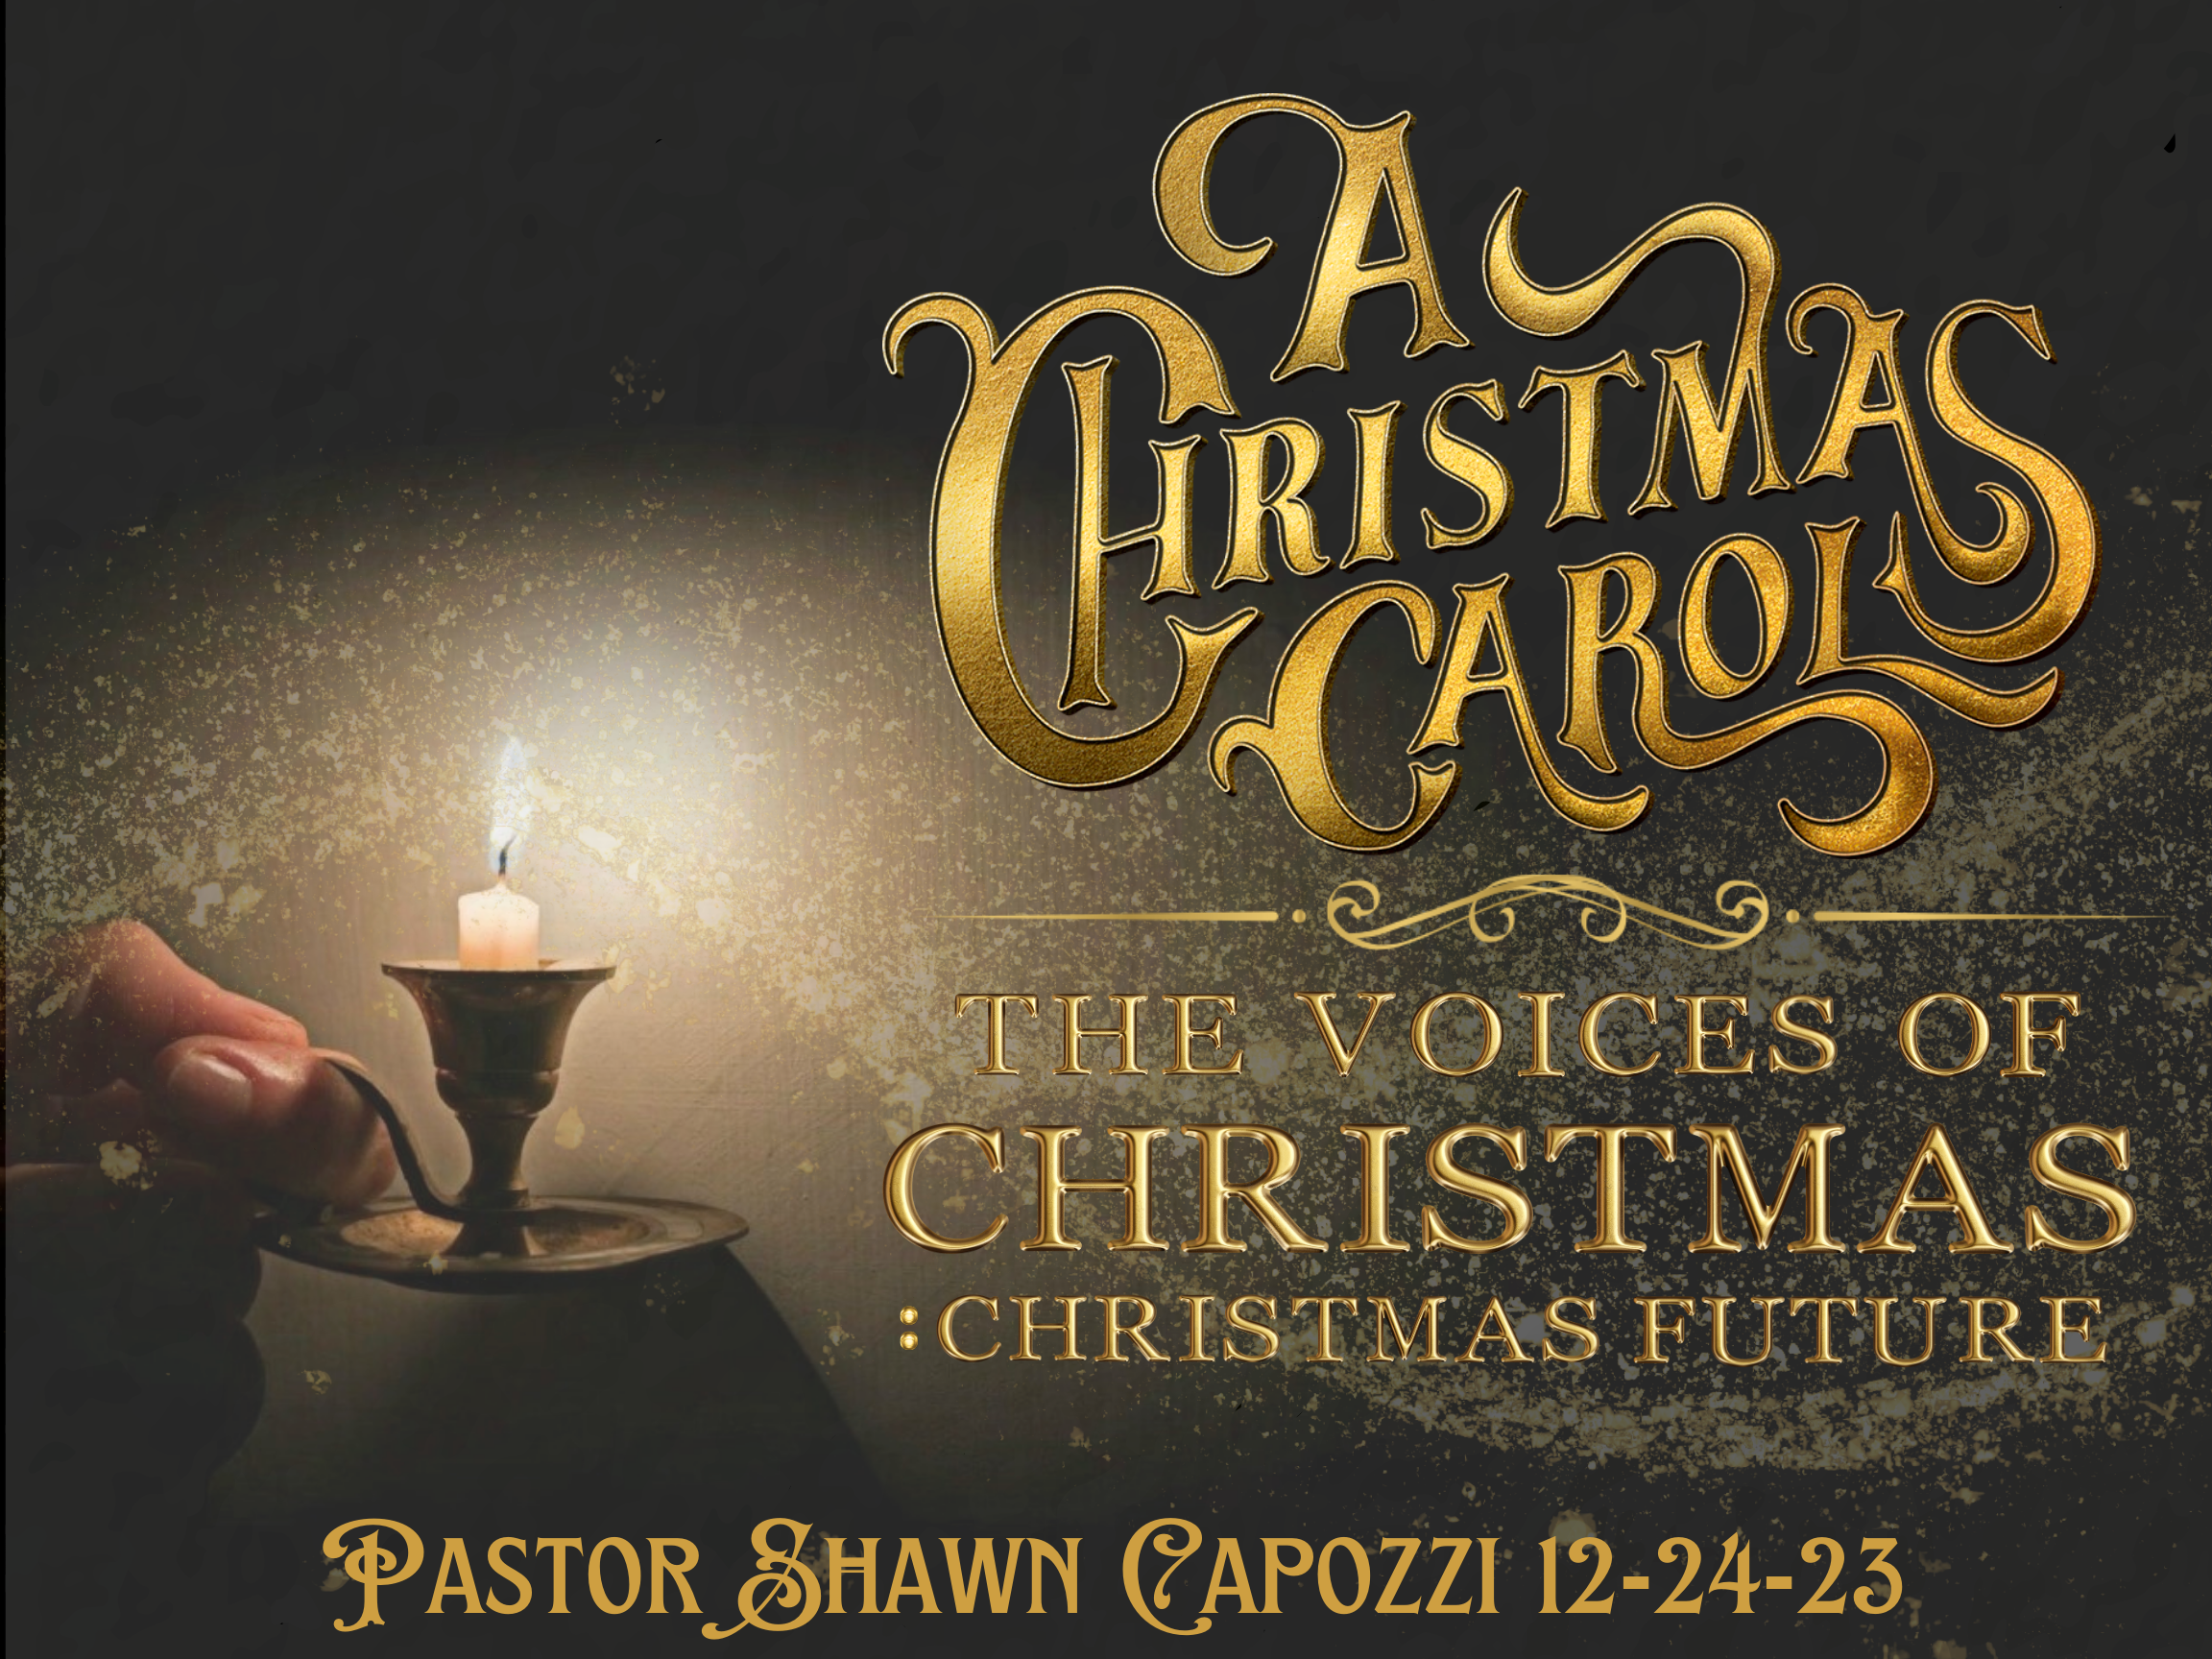 A Christmas Carol - Voice of Christmas Future